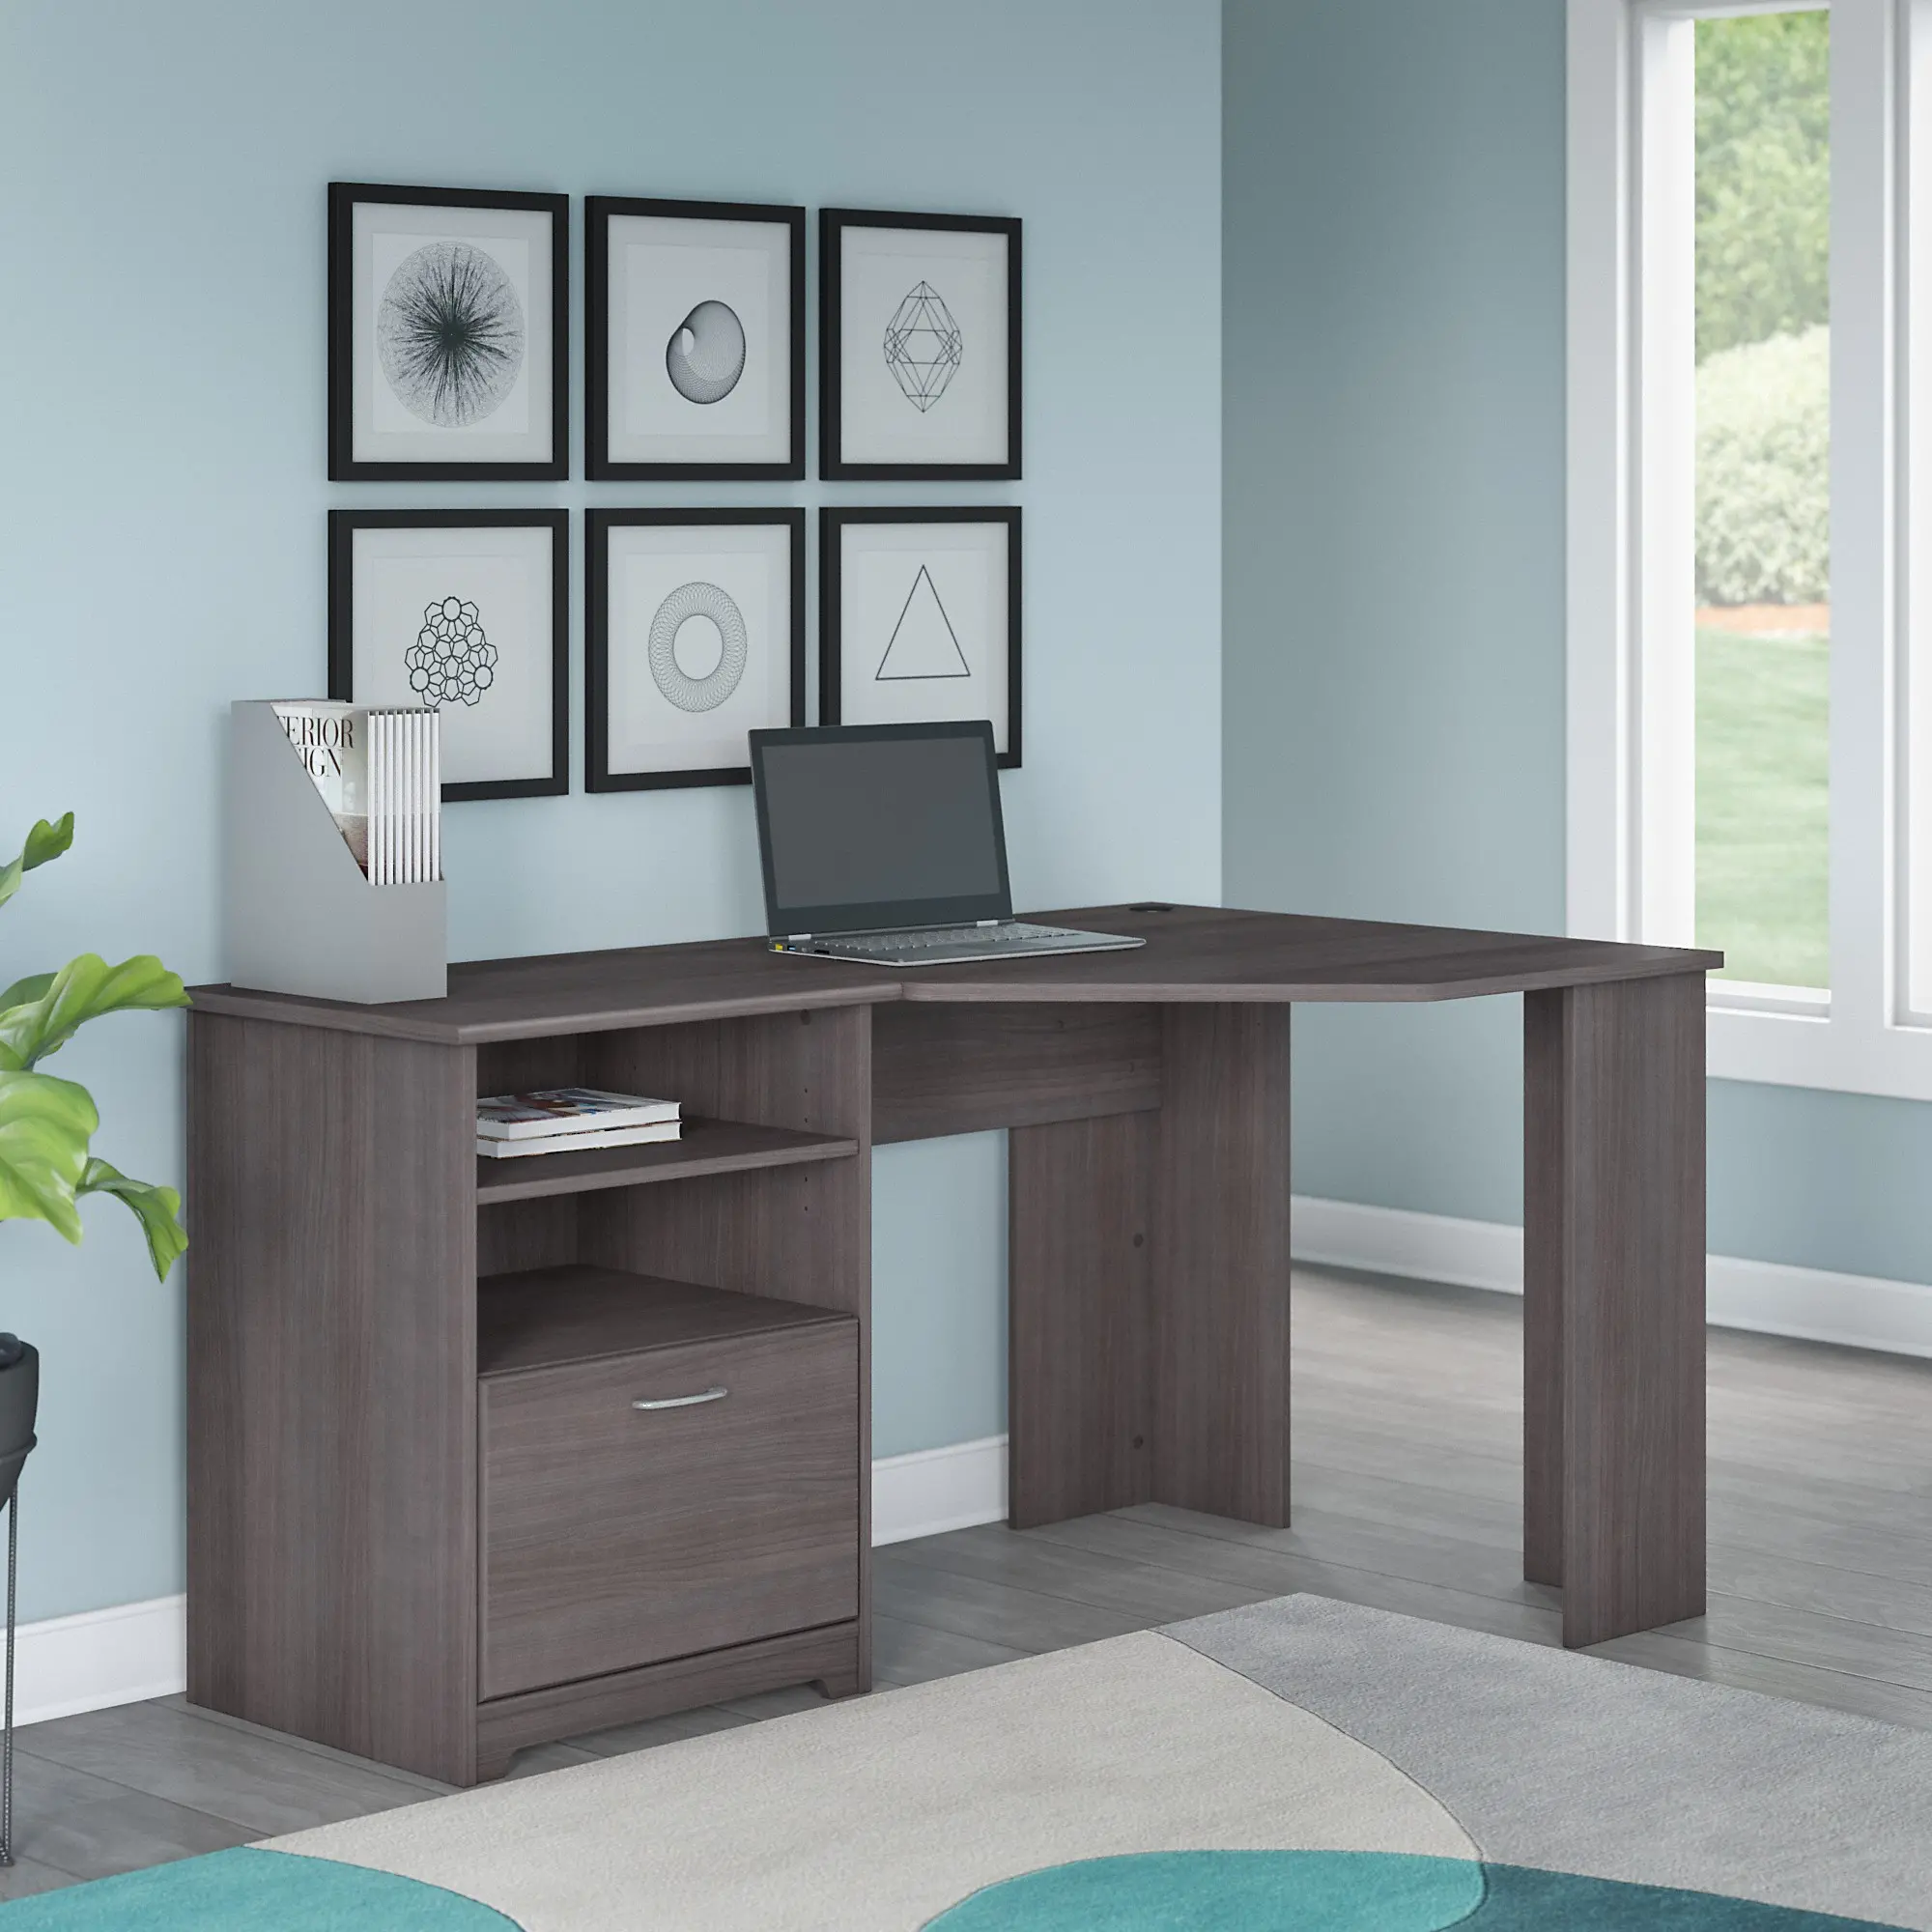 Cabot Heather Gray Corner Desk - Bush Furniture